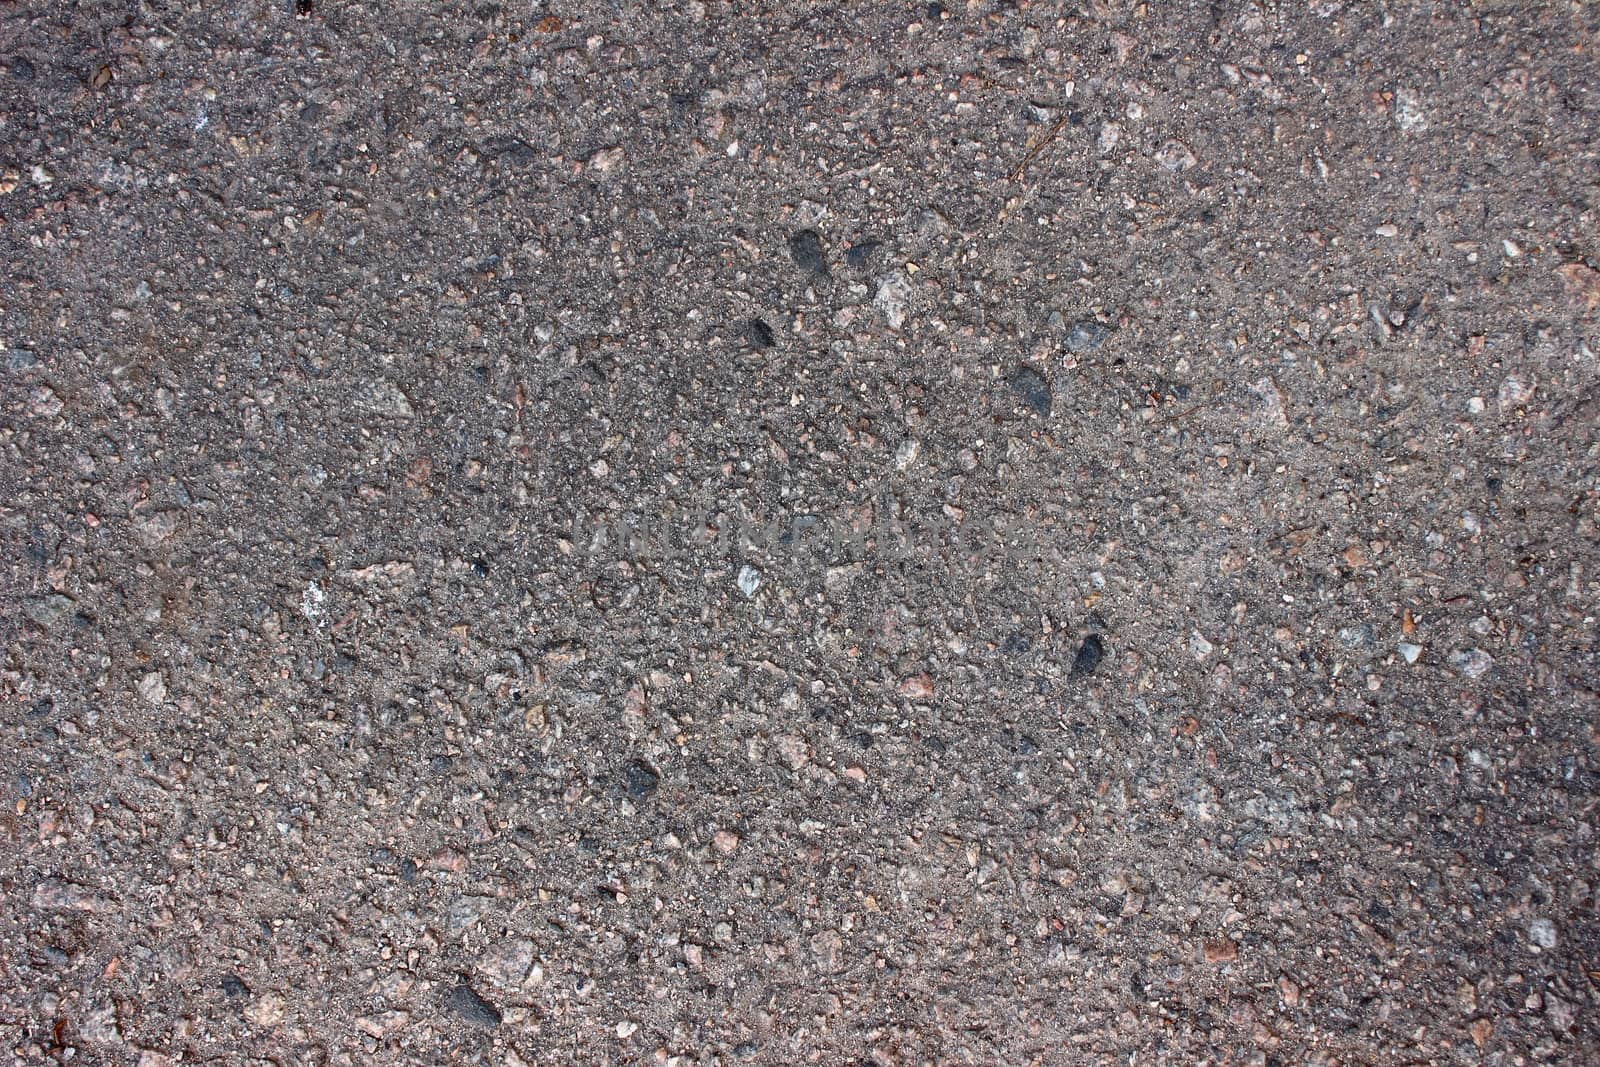 plain gray asphalt for hiking and biking